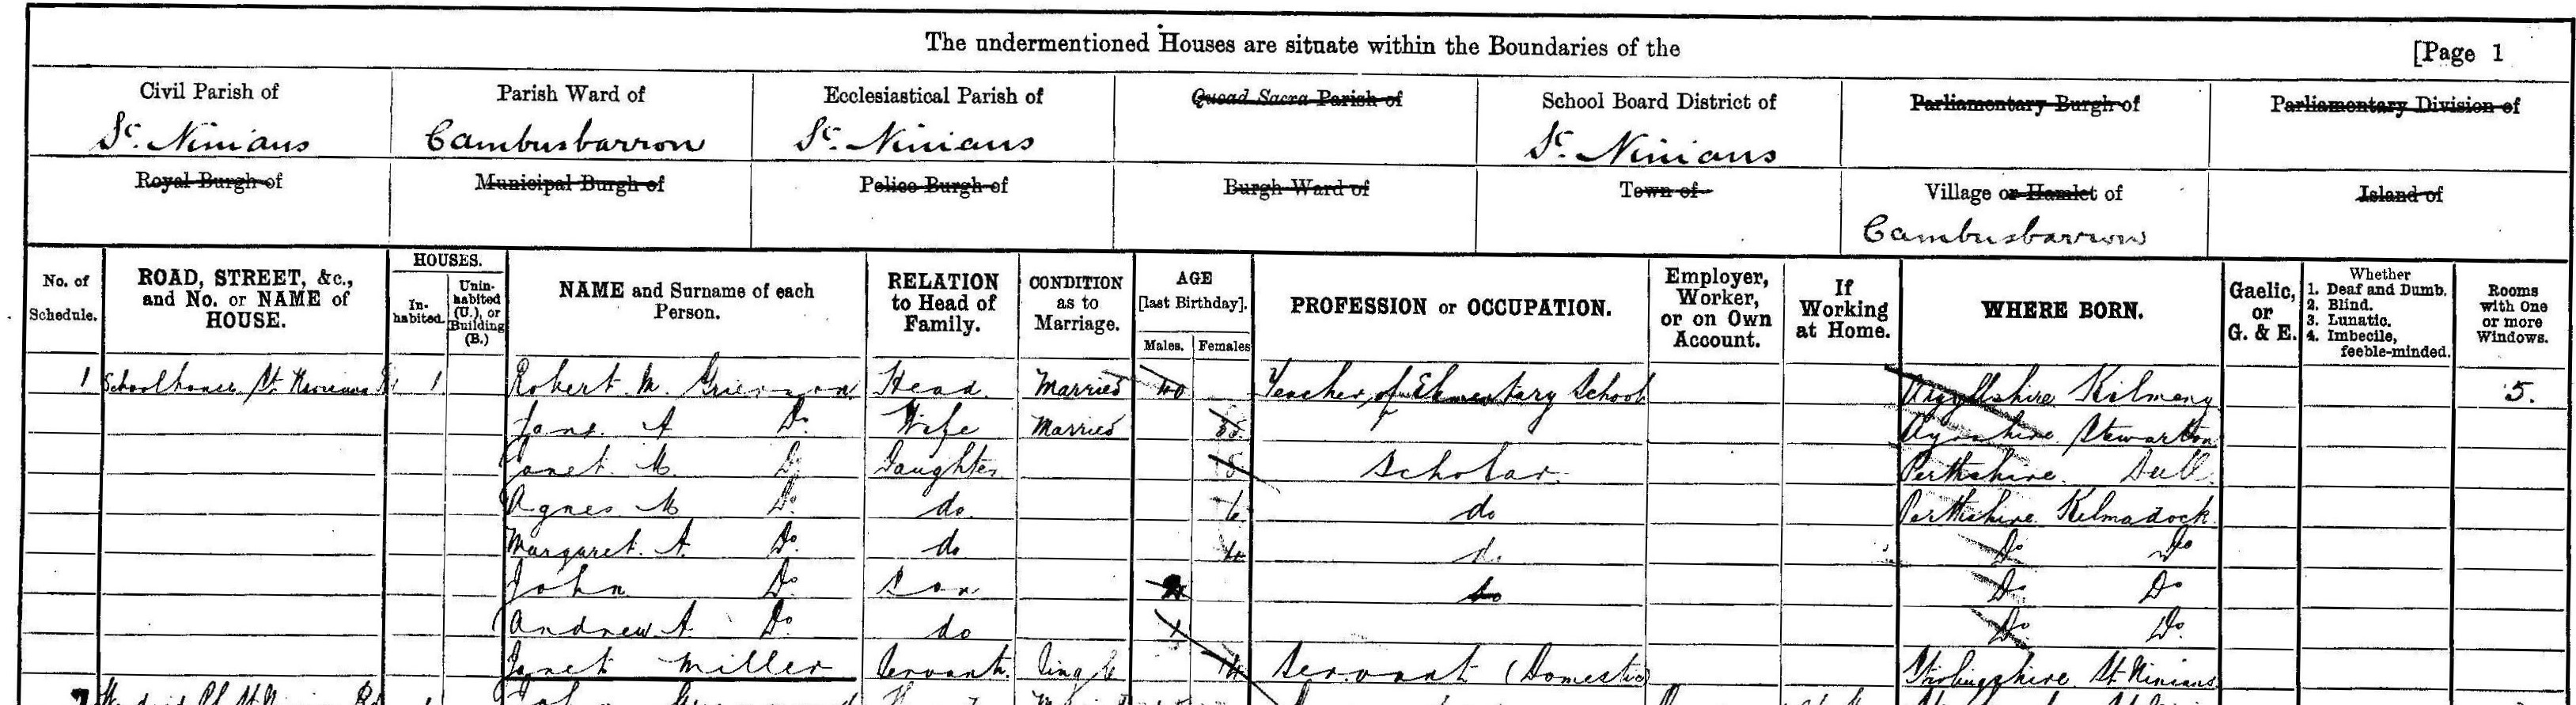 1901 census enumerated John Grierson's family in Cambusbarron